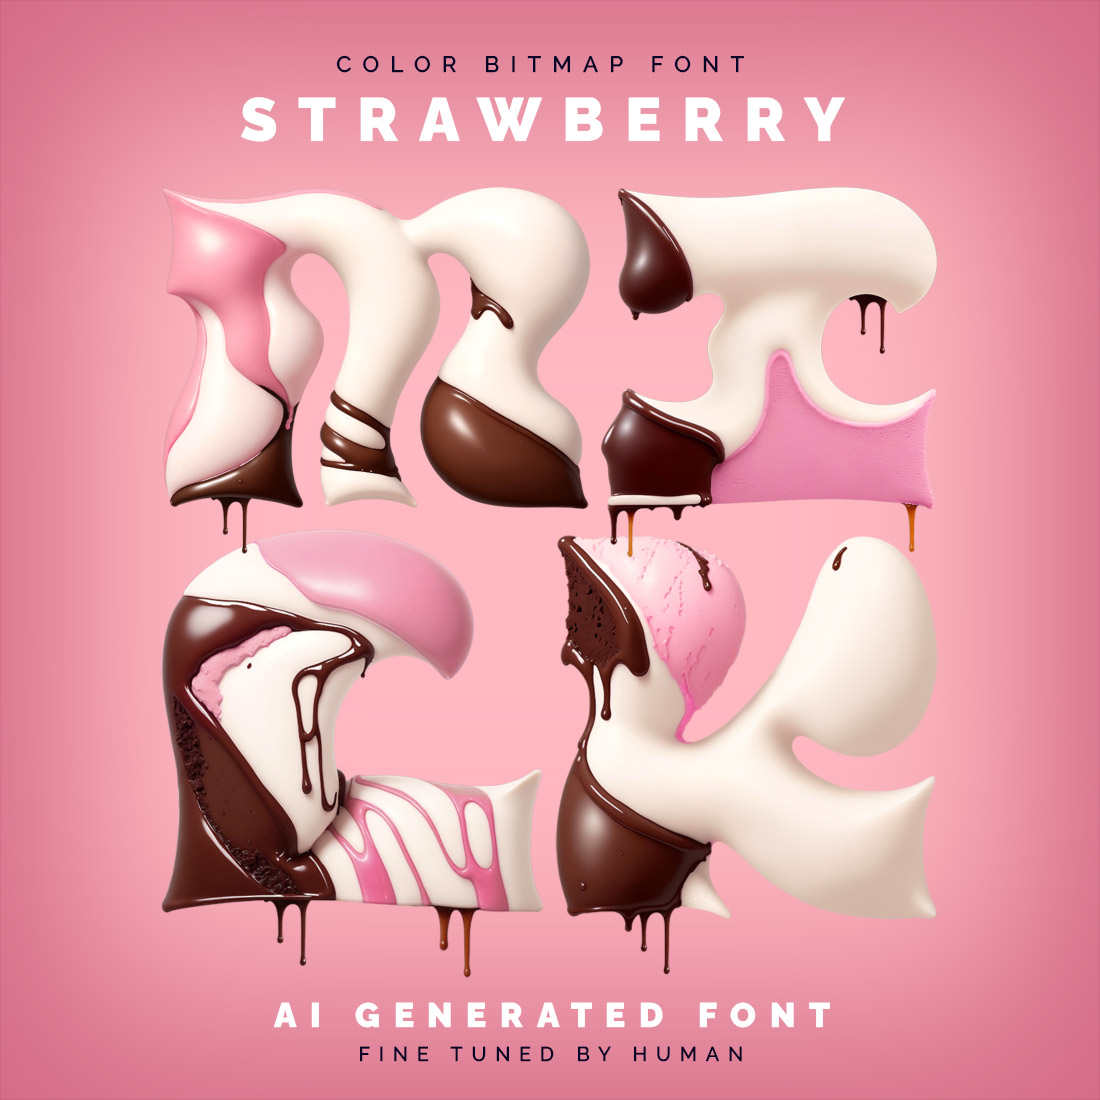 Strawberry Milk - Color Bitmap Font cover image.